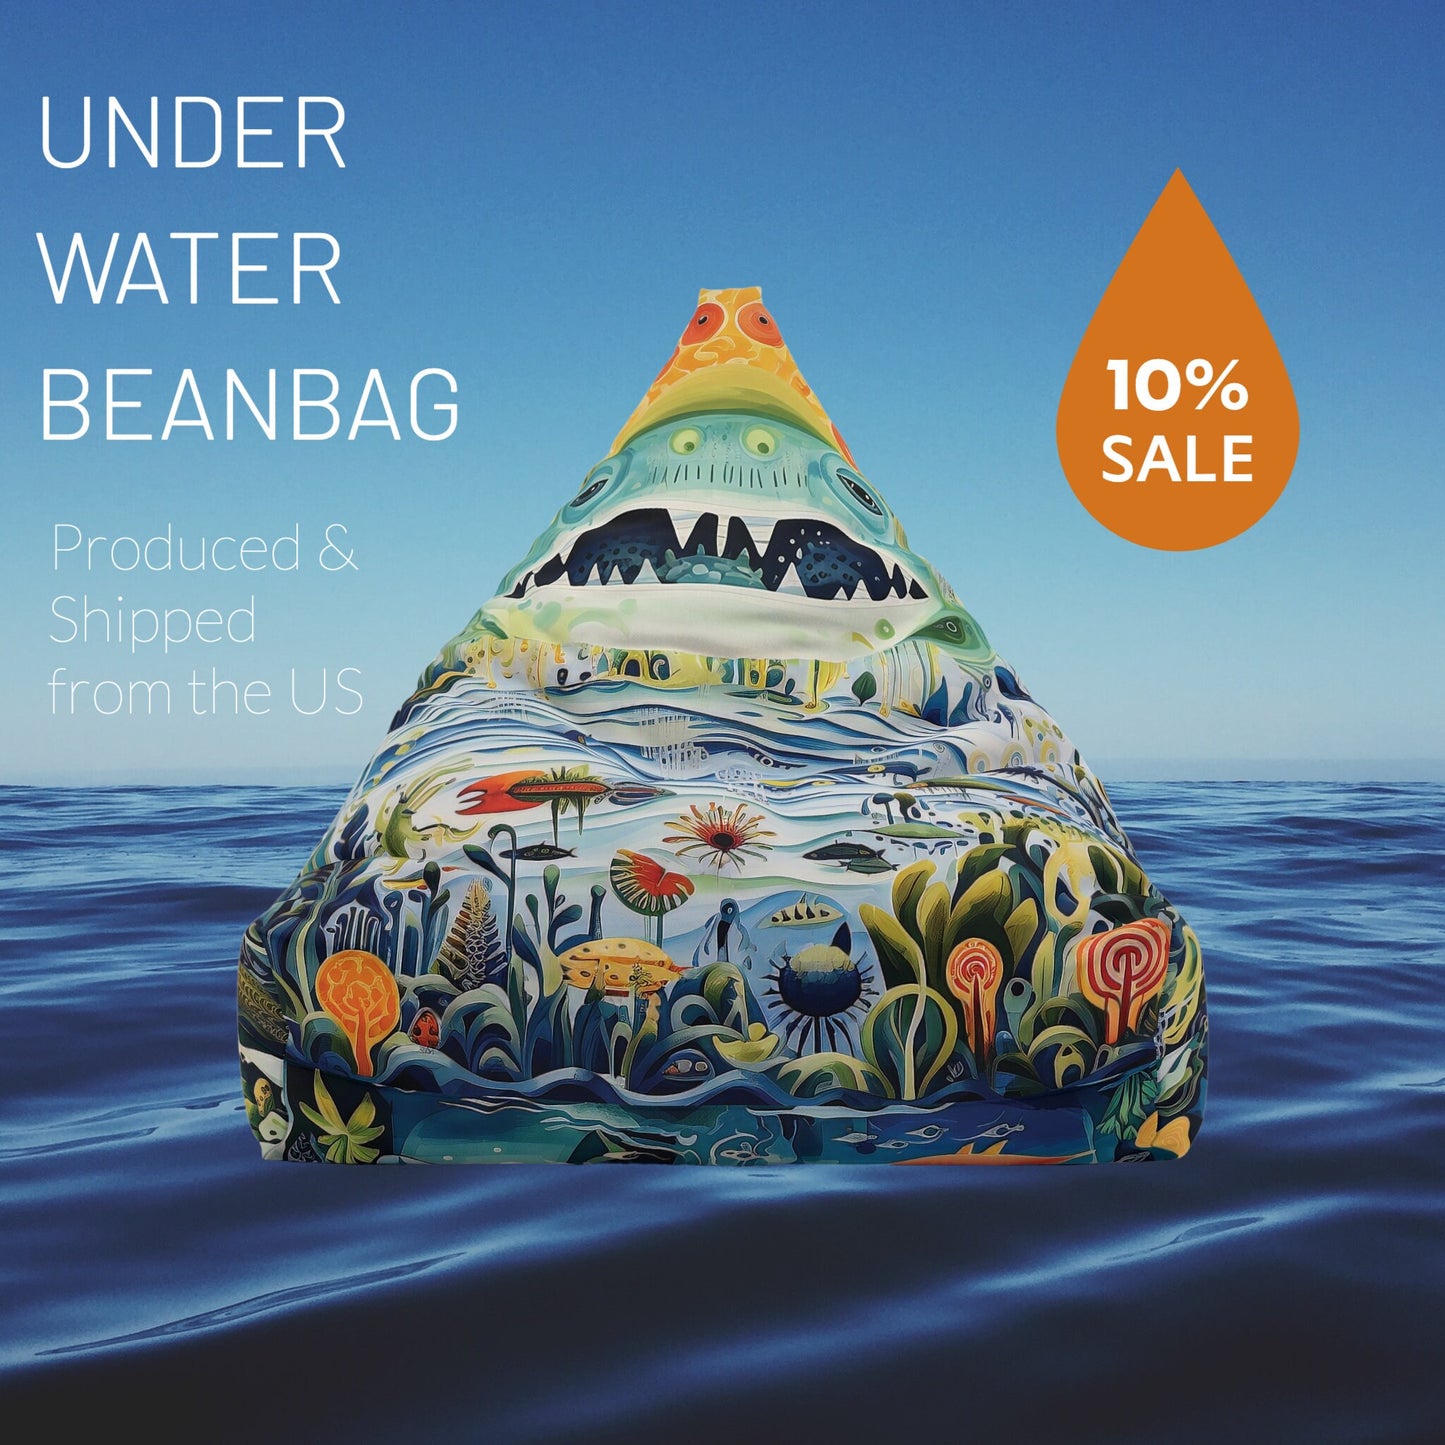 Under Water Bean Bag Comfort Bean Bag • Durable Polyester Cover • Versatile Indoor Seating Option